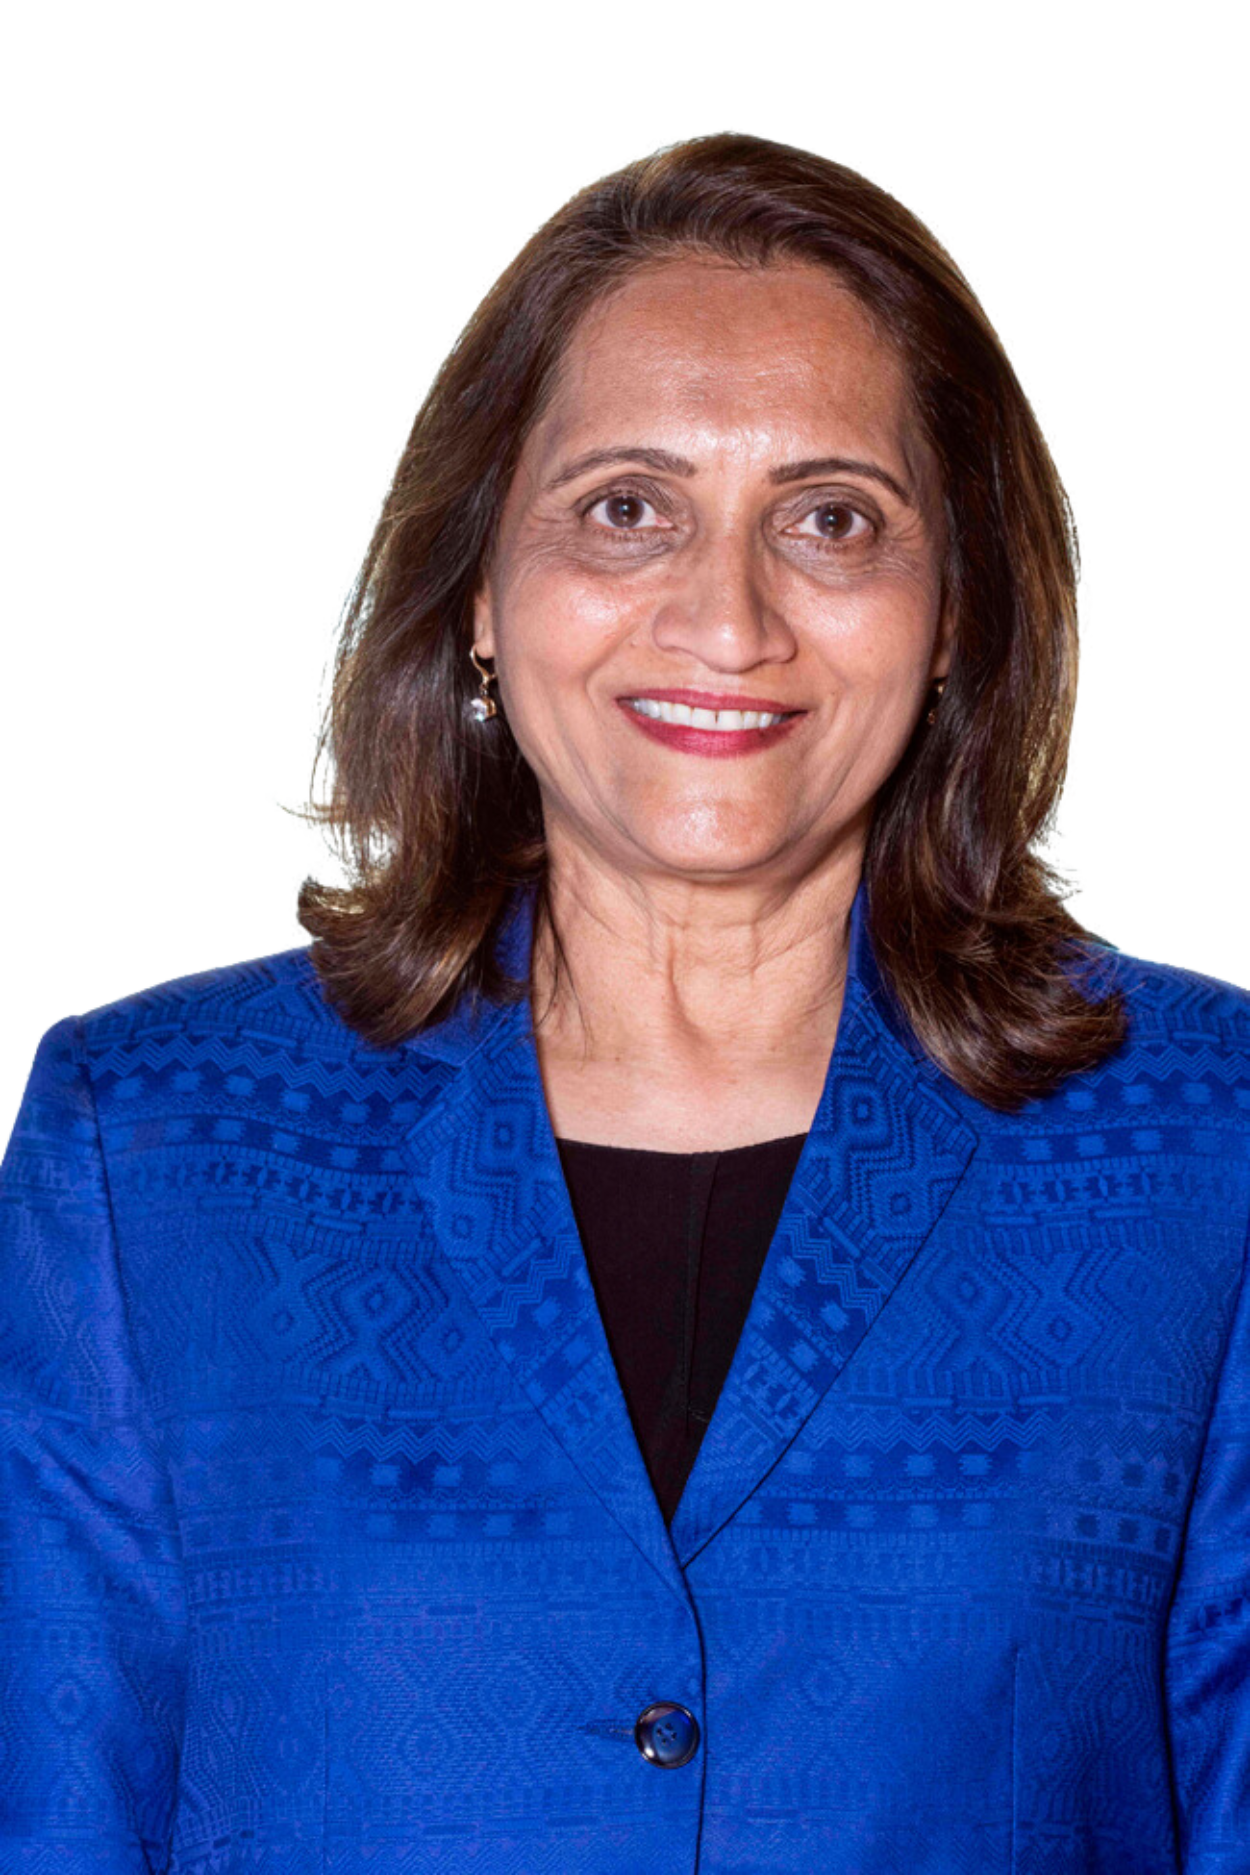 Anjana Patel